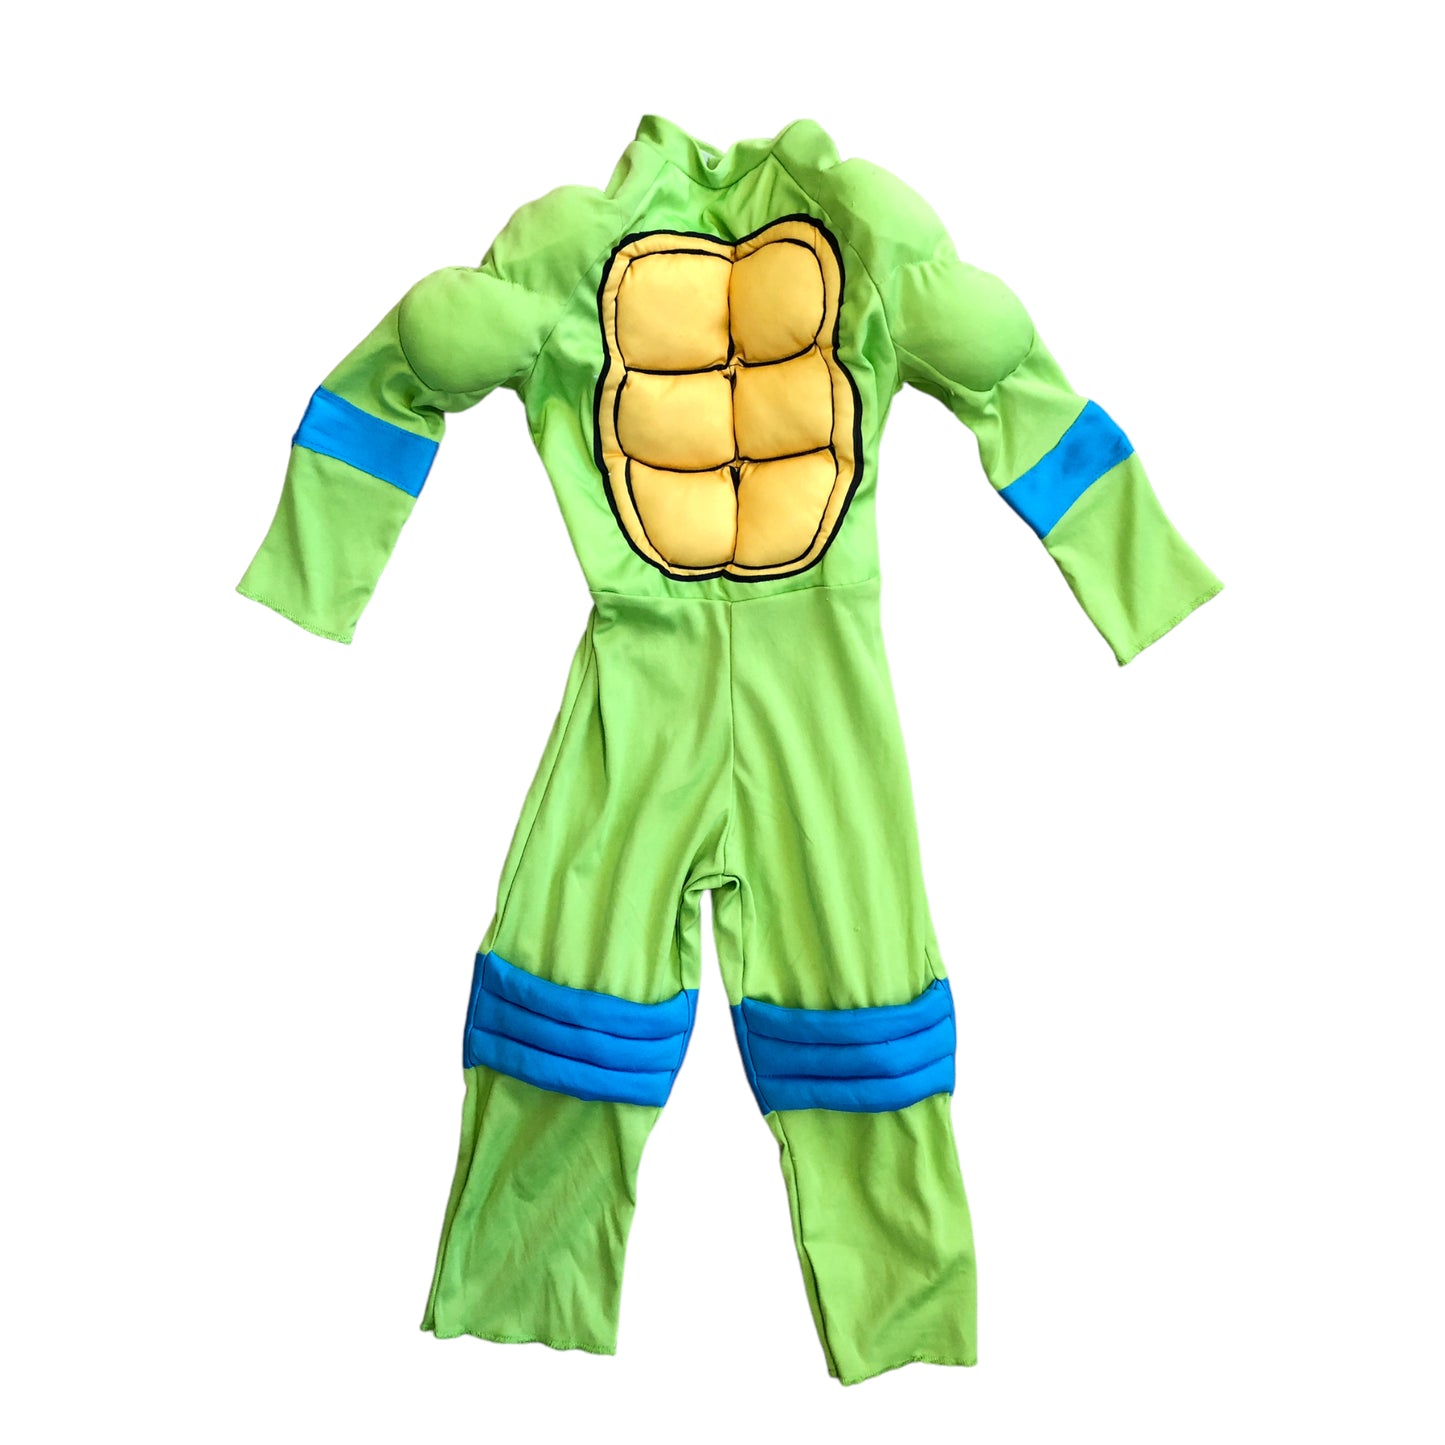 Ninja Turtle Costume, Leonardo - Toddler 3/4 years old